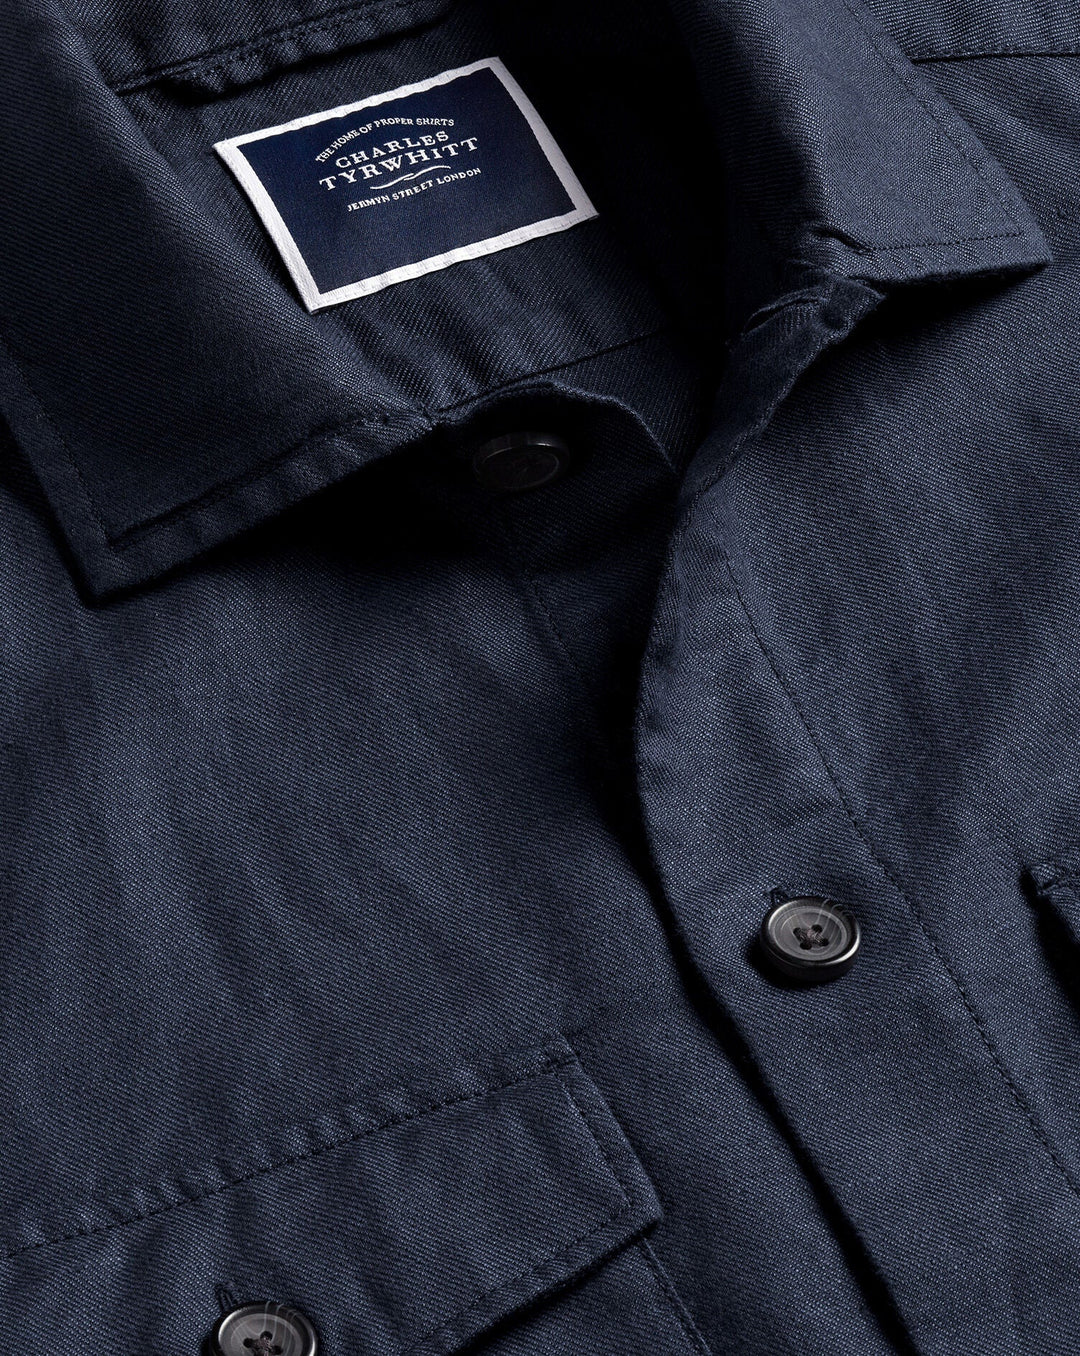 Charles Tyrwhitt Navy Blue Plain Cotton Linen Overshirt